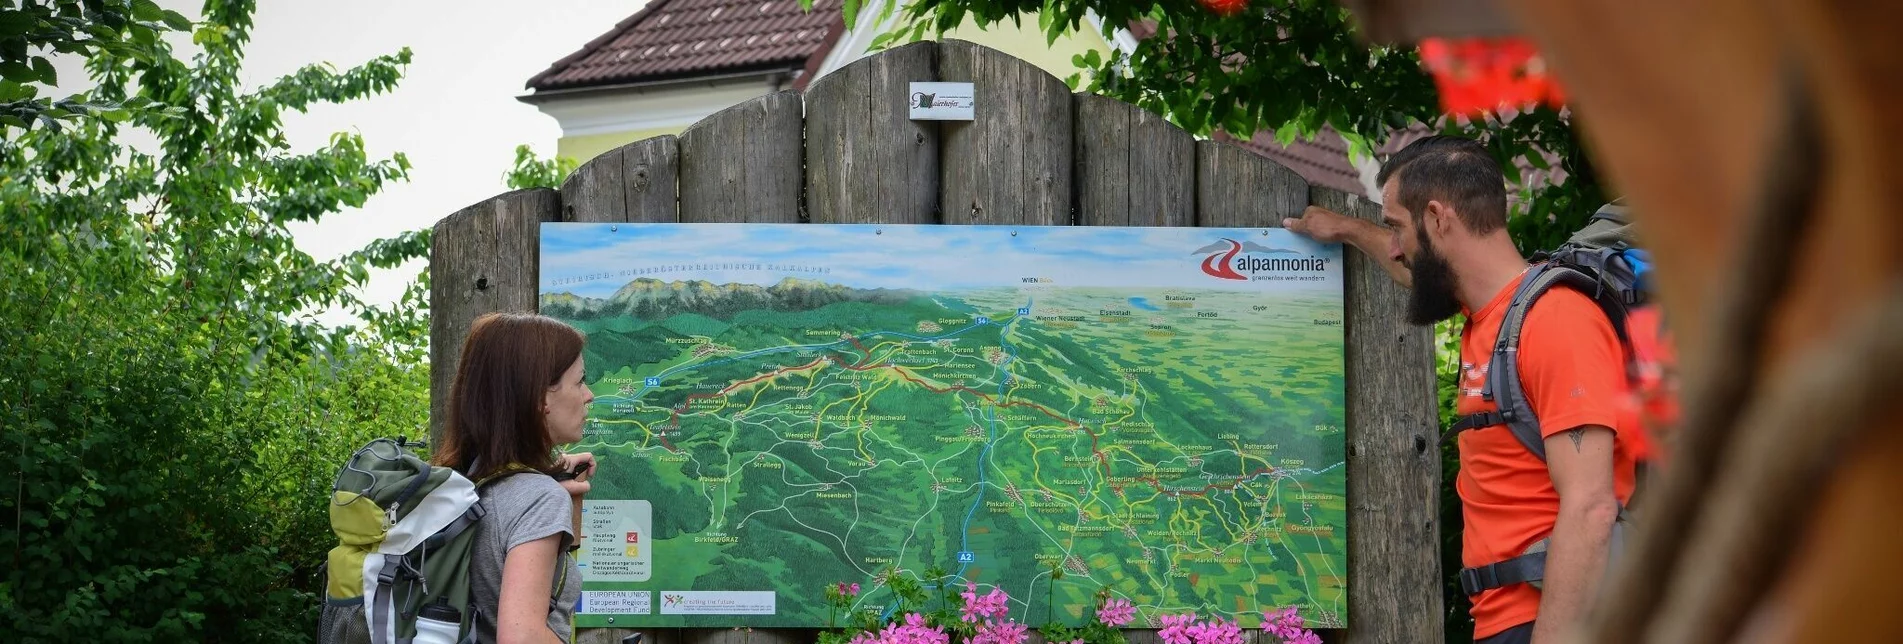 Wanderung alpannonia Rundweg - auf Peter Rosegger Spuren - Touren-Impression #1 | © Region Joglland - Waldheimat